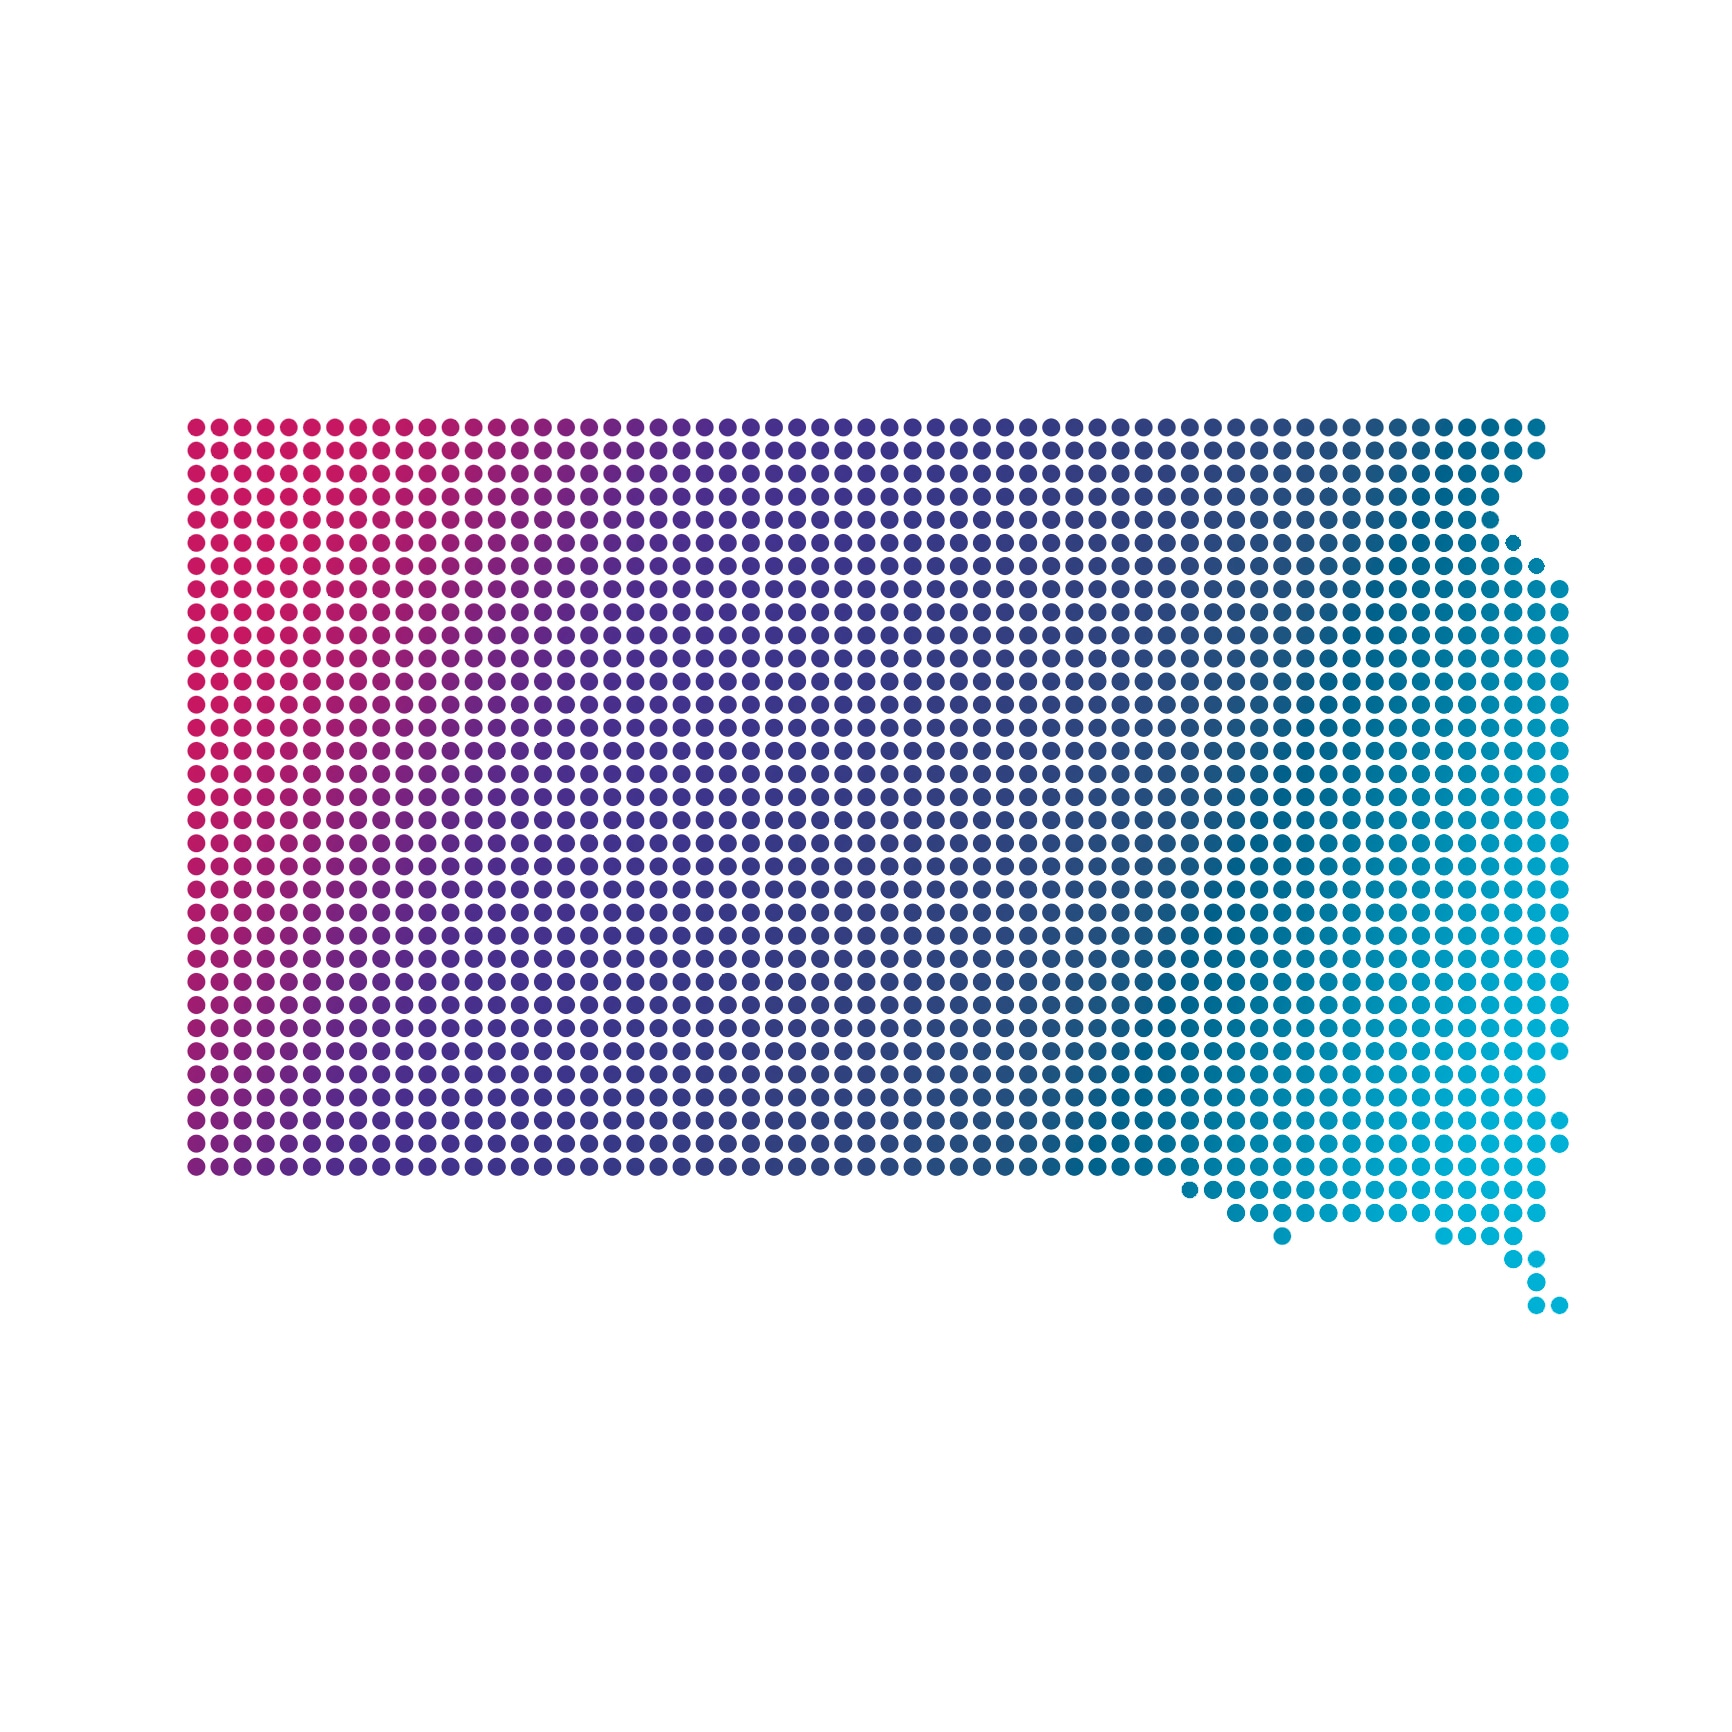 South Dakota map of blue dots on white background